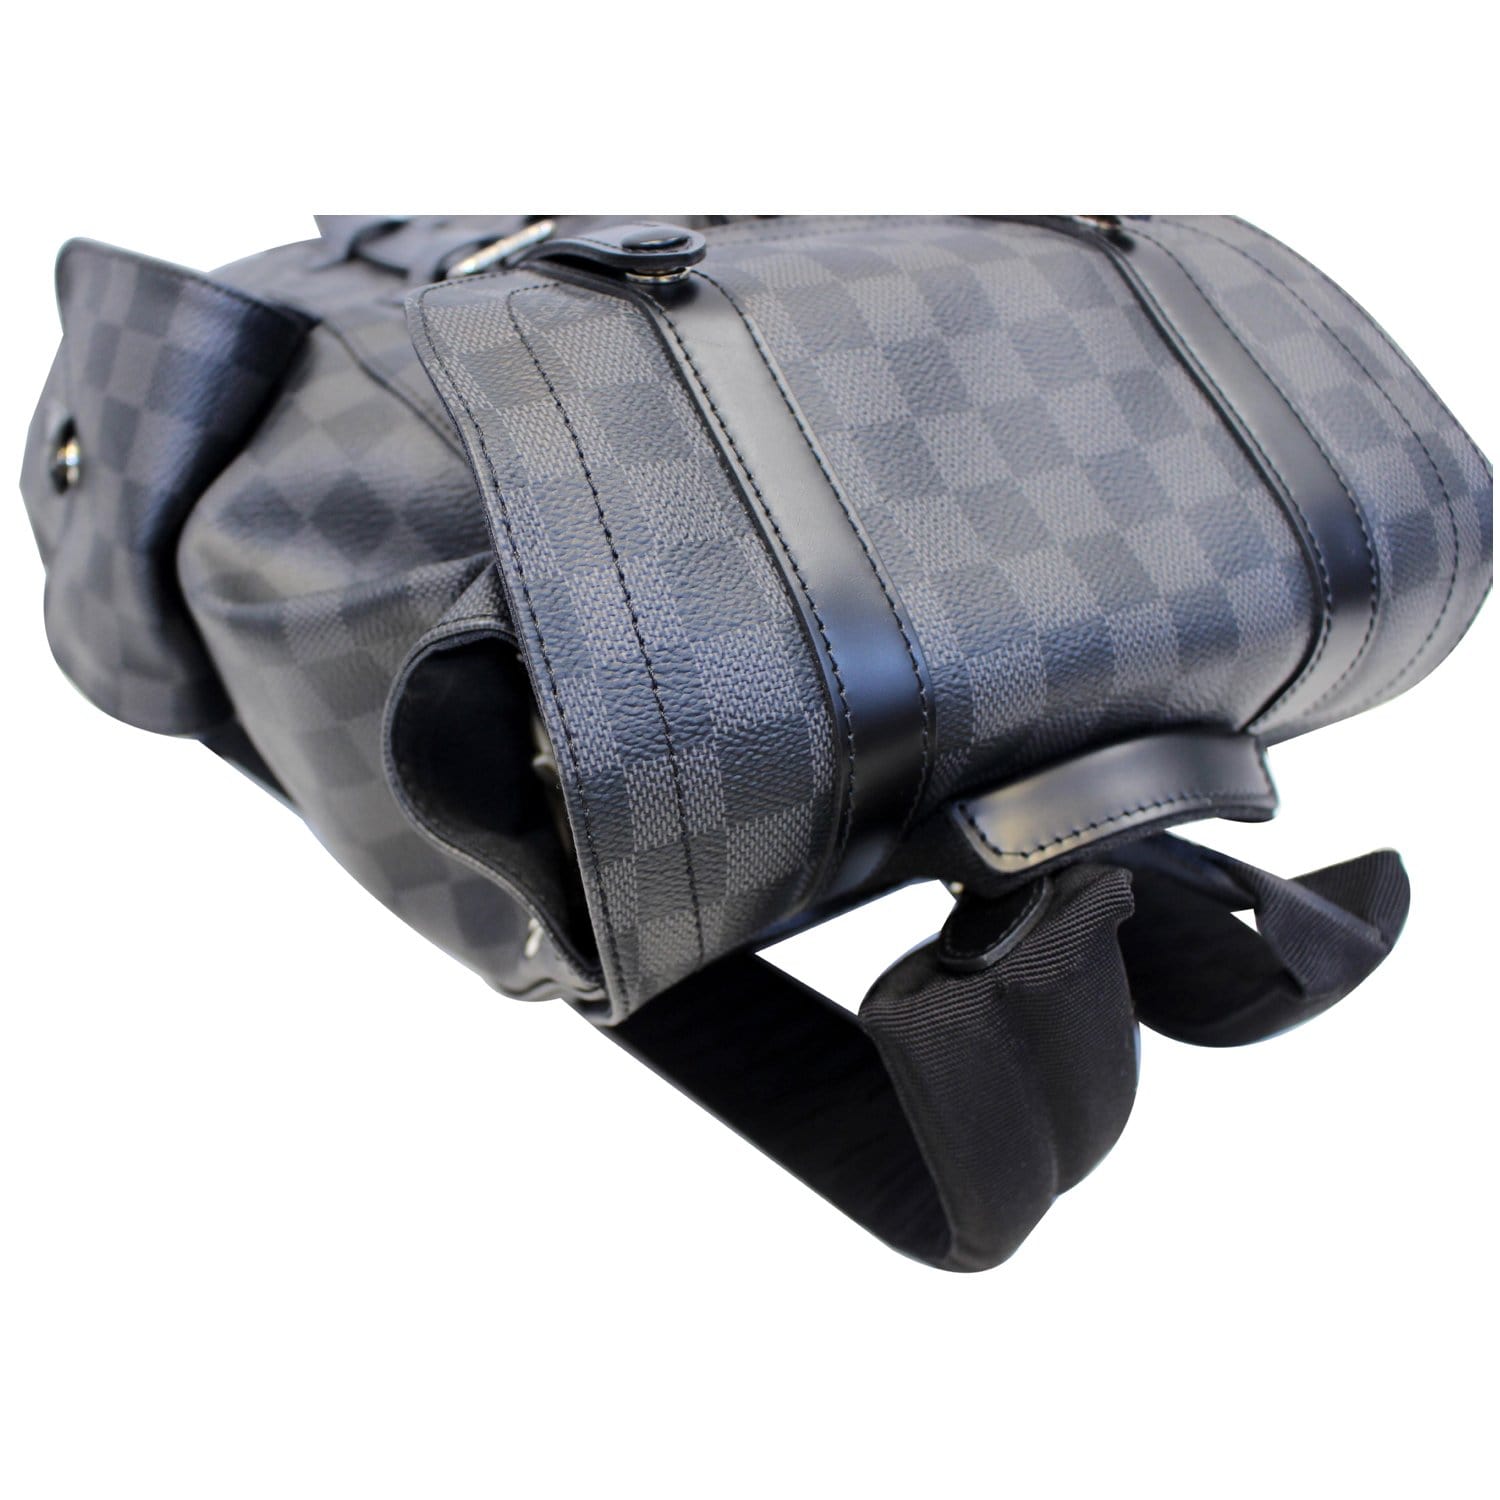 Louis Vuitton Damier Graphite Christopher PM - Black Backpacks